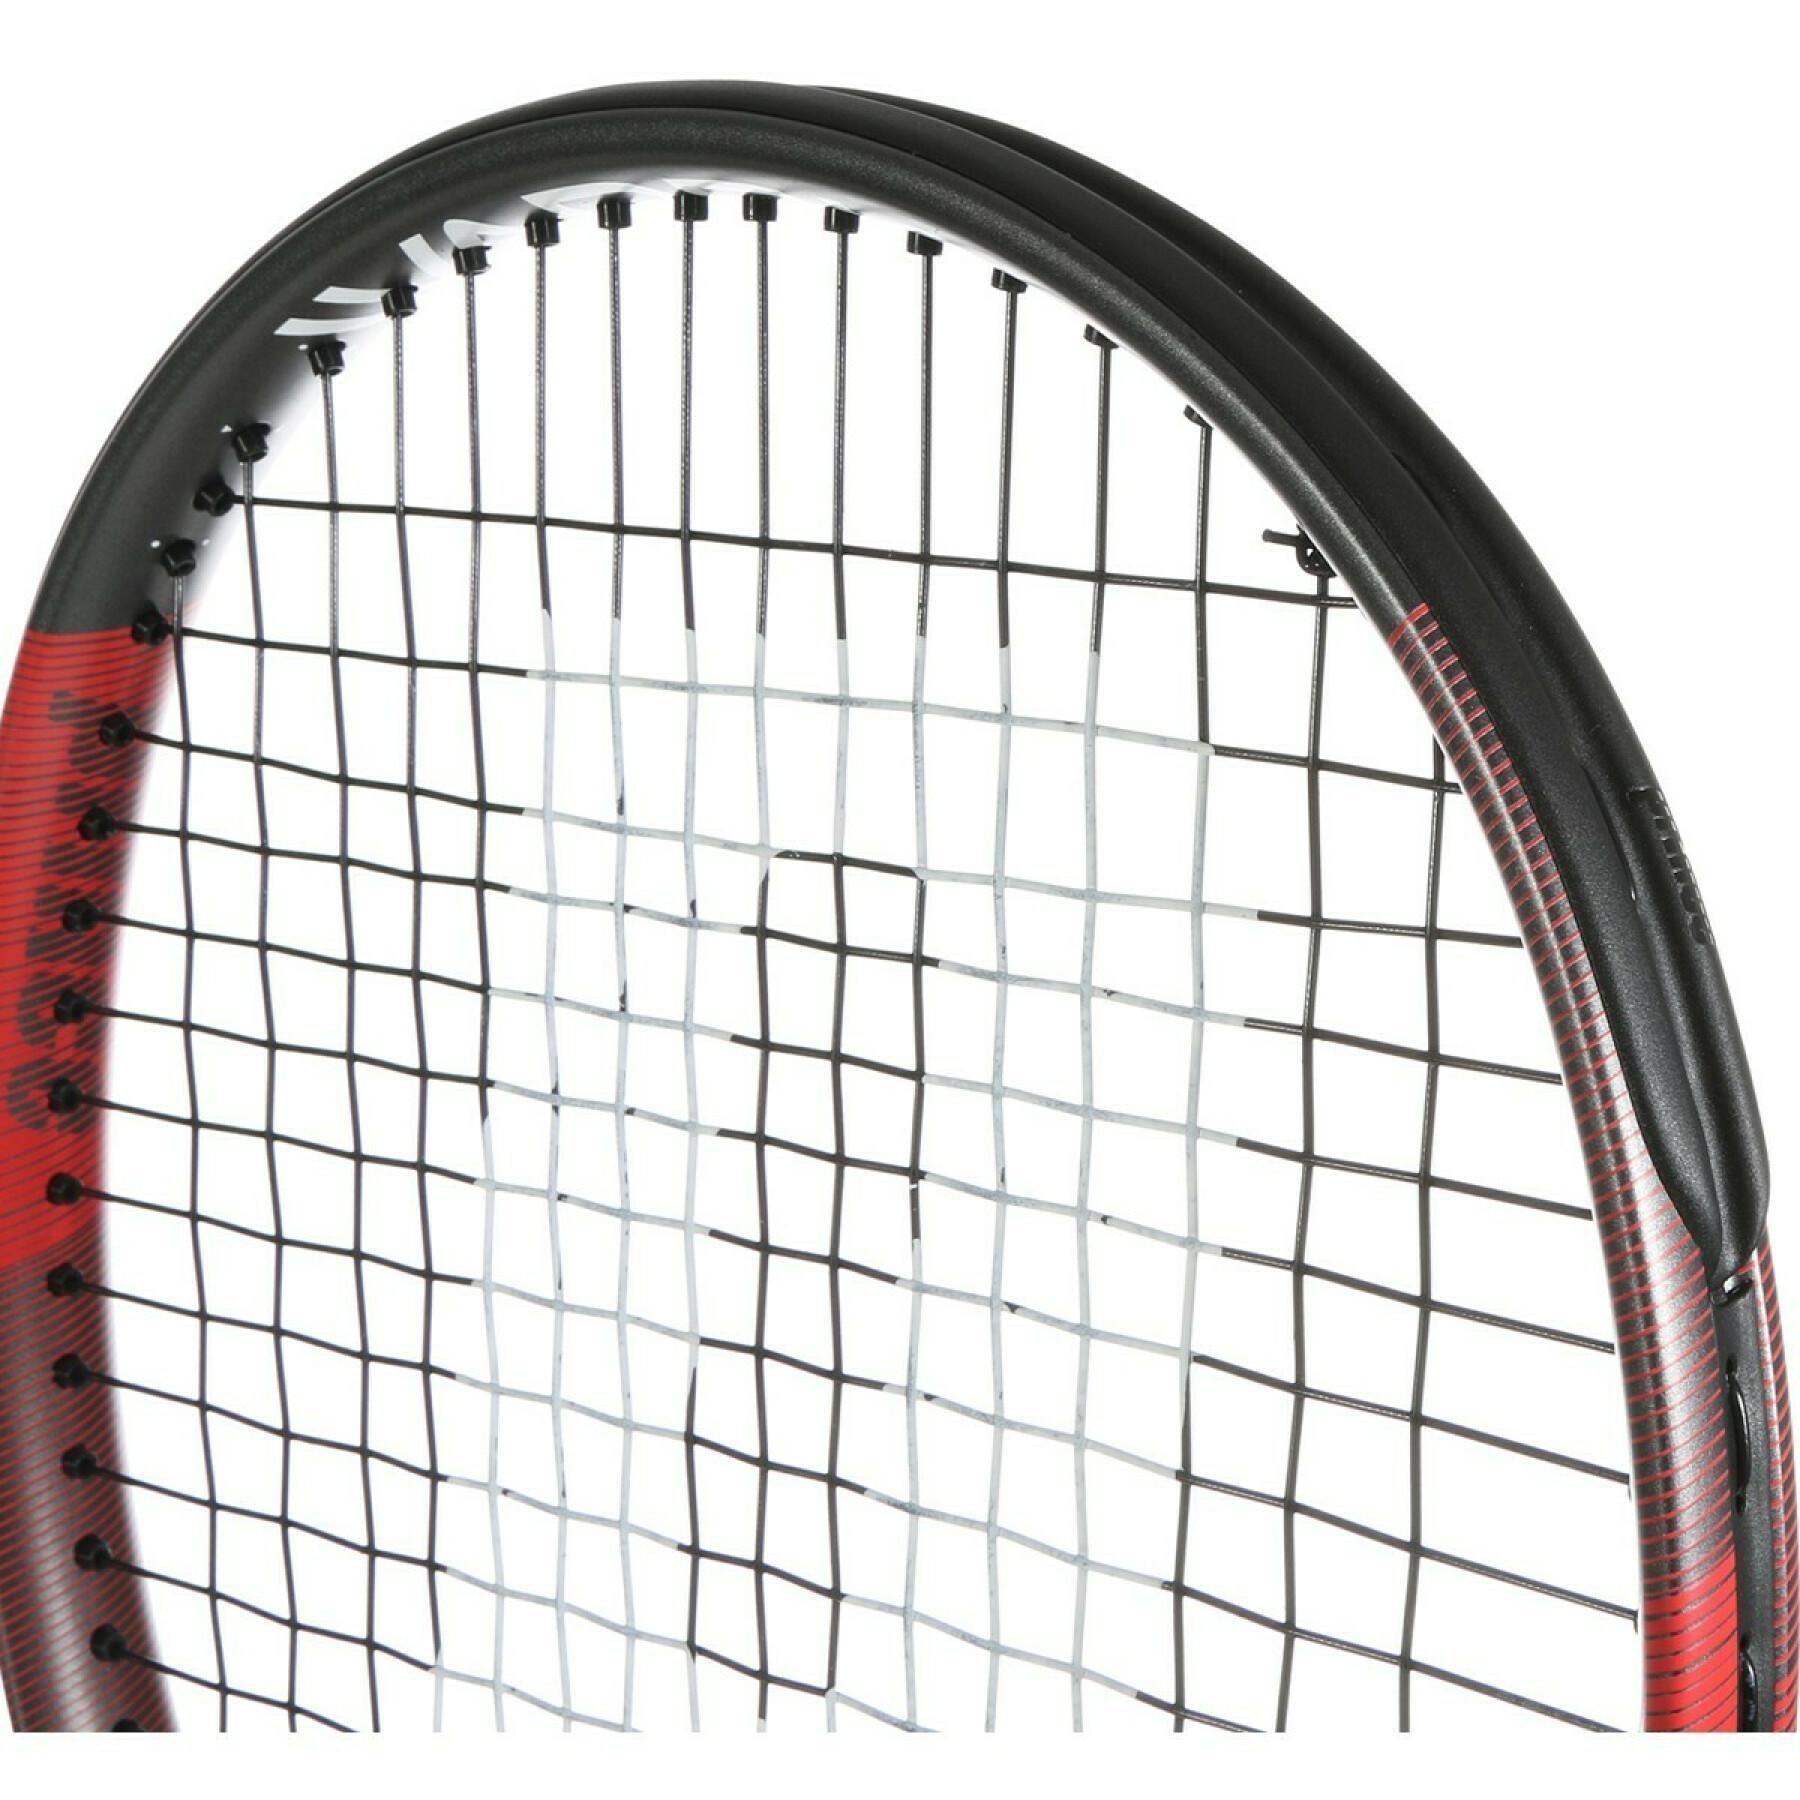 Raquette de tennis Prince warrior 100 (285g)